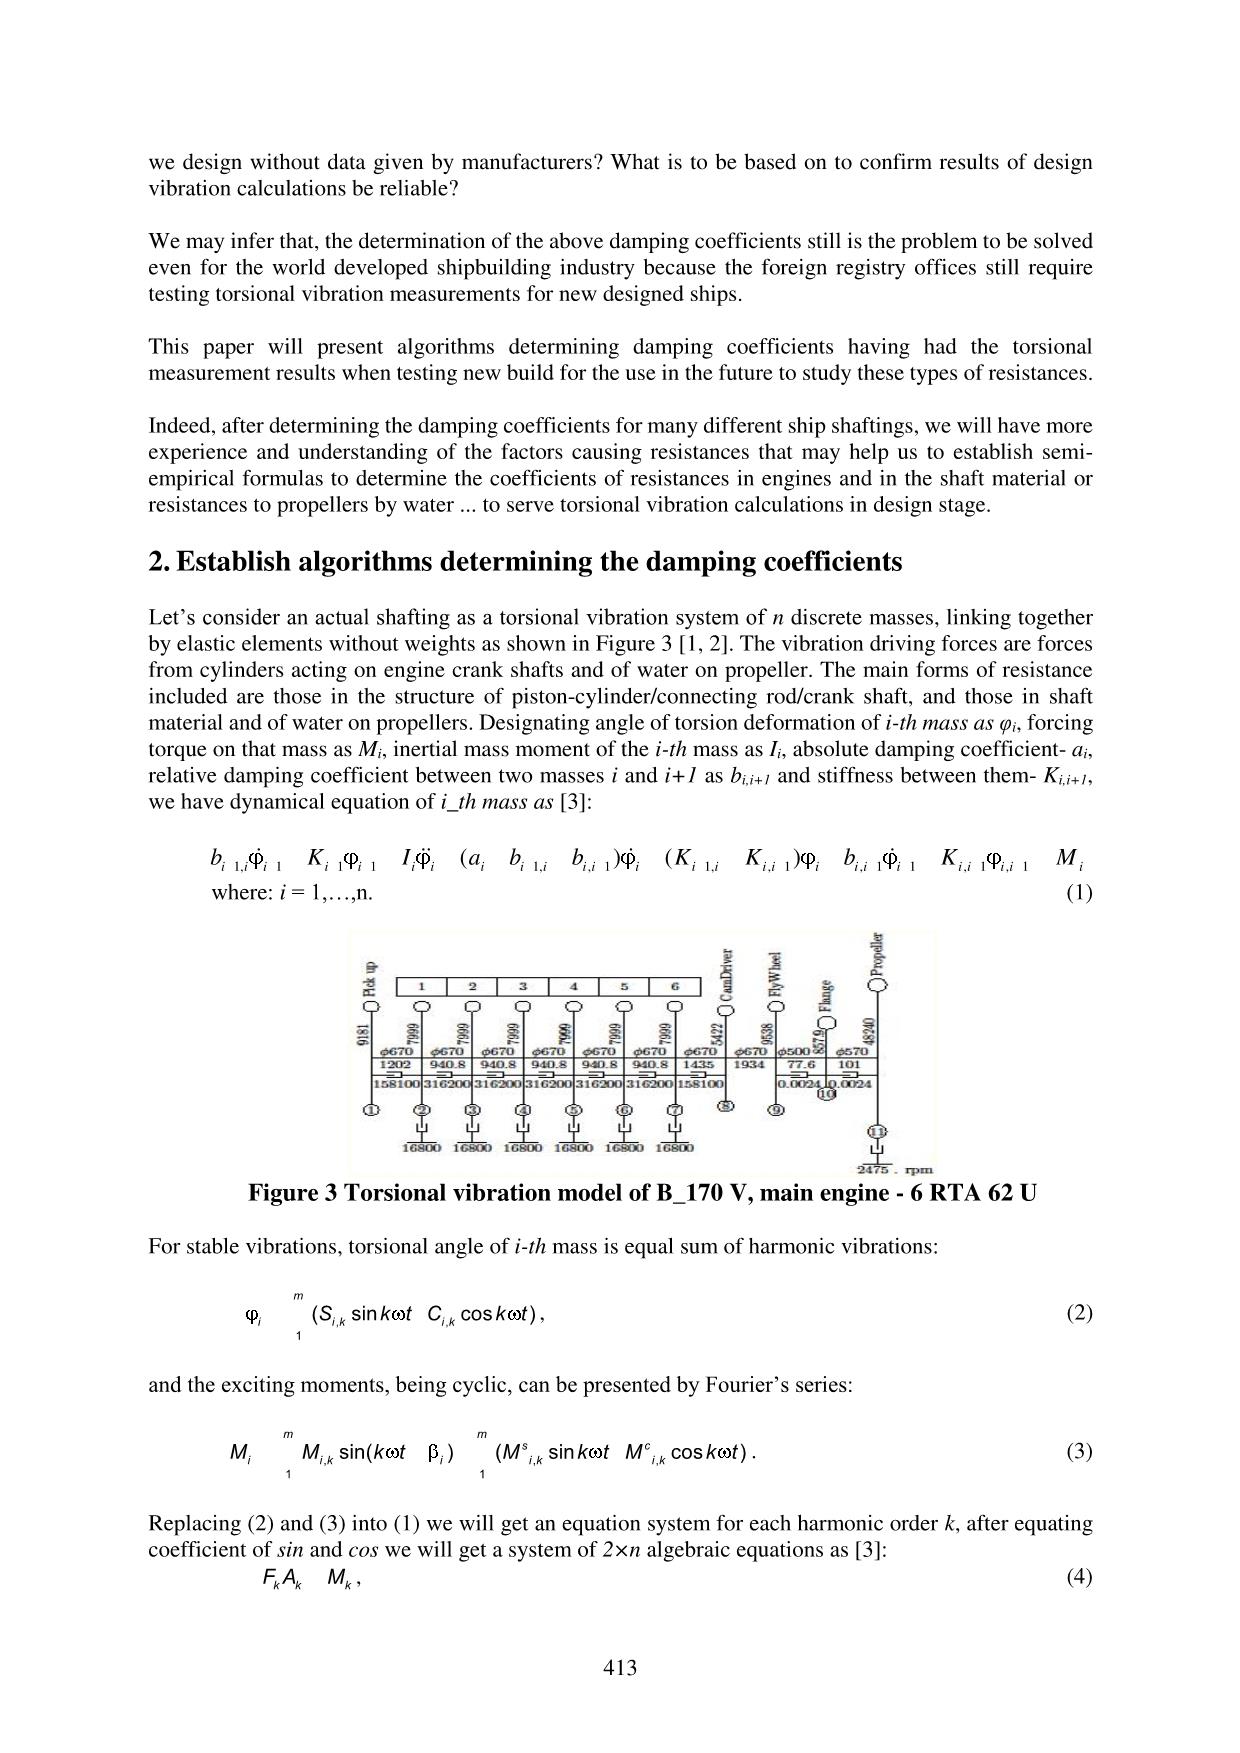 The determining torsional vibration damping coefficients algorithm for computing marine shafting’s vibrations trang 3